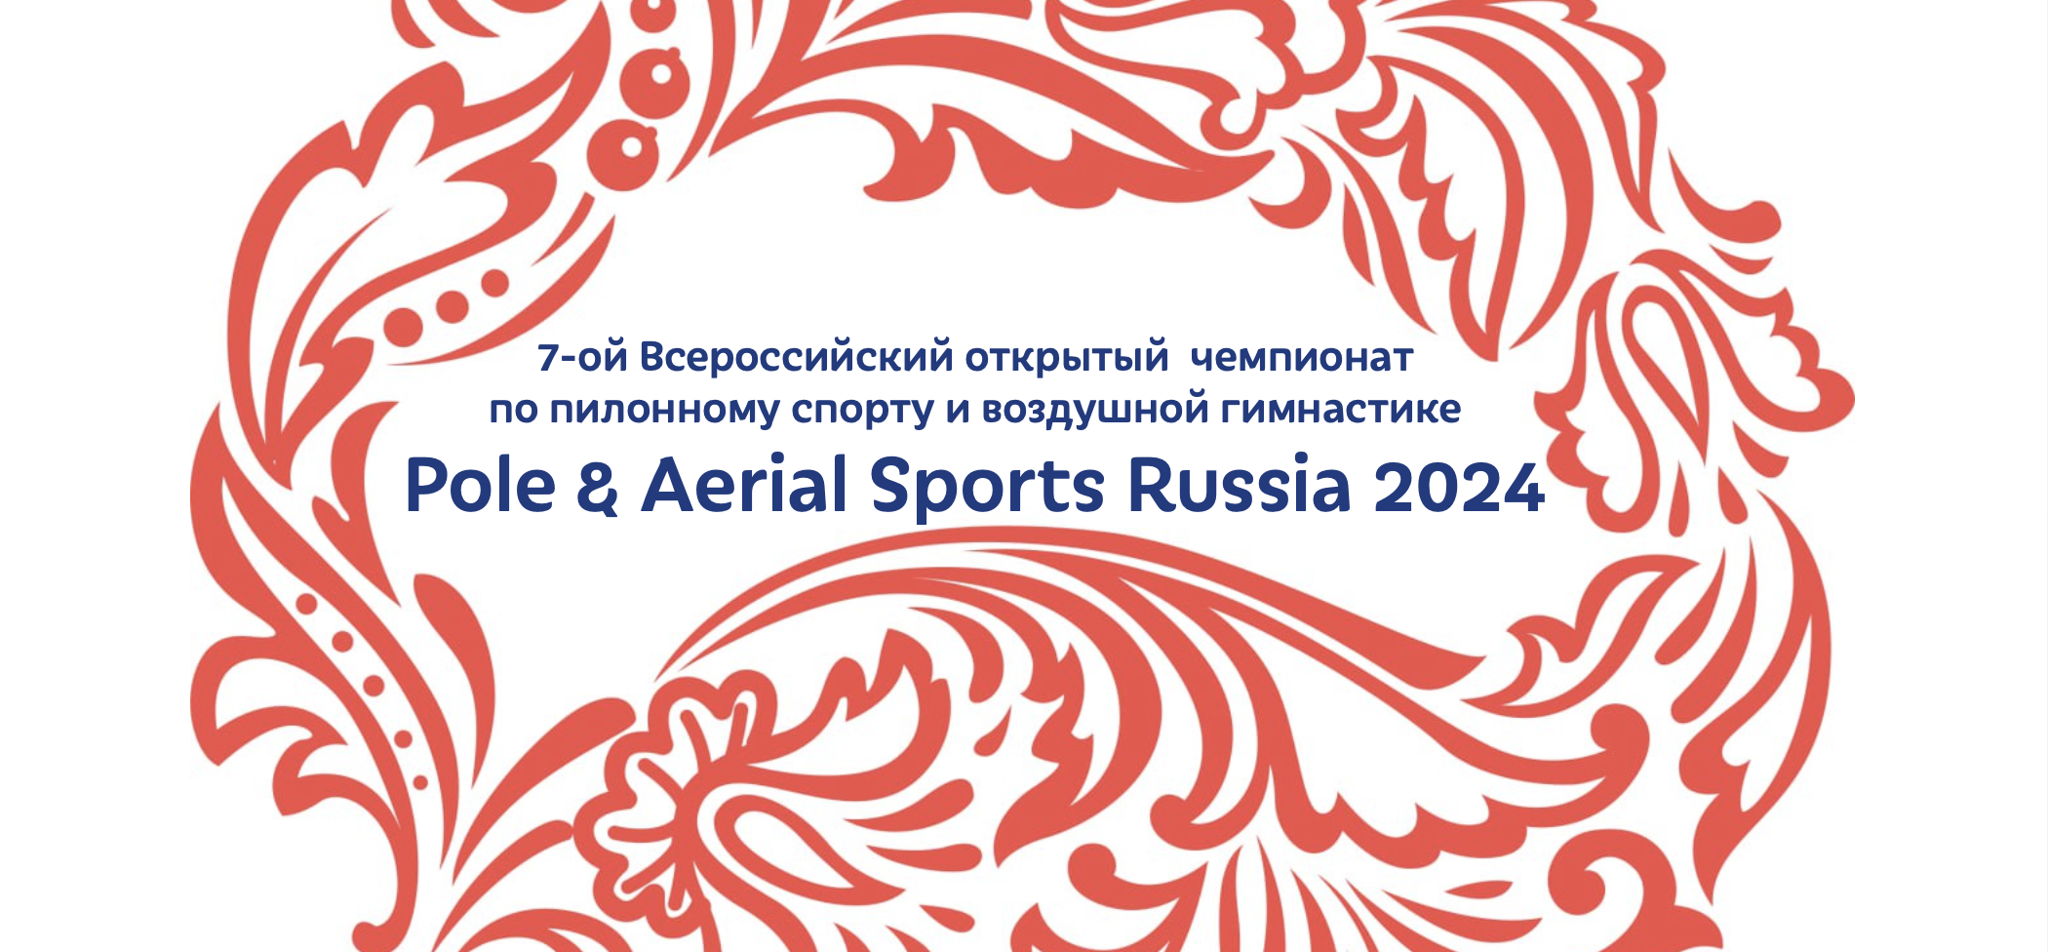 7-ой Всероссийский открытый чемпионат «Pole & Aerial Sports Russia 2024»